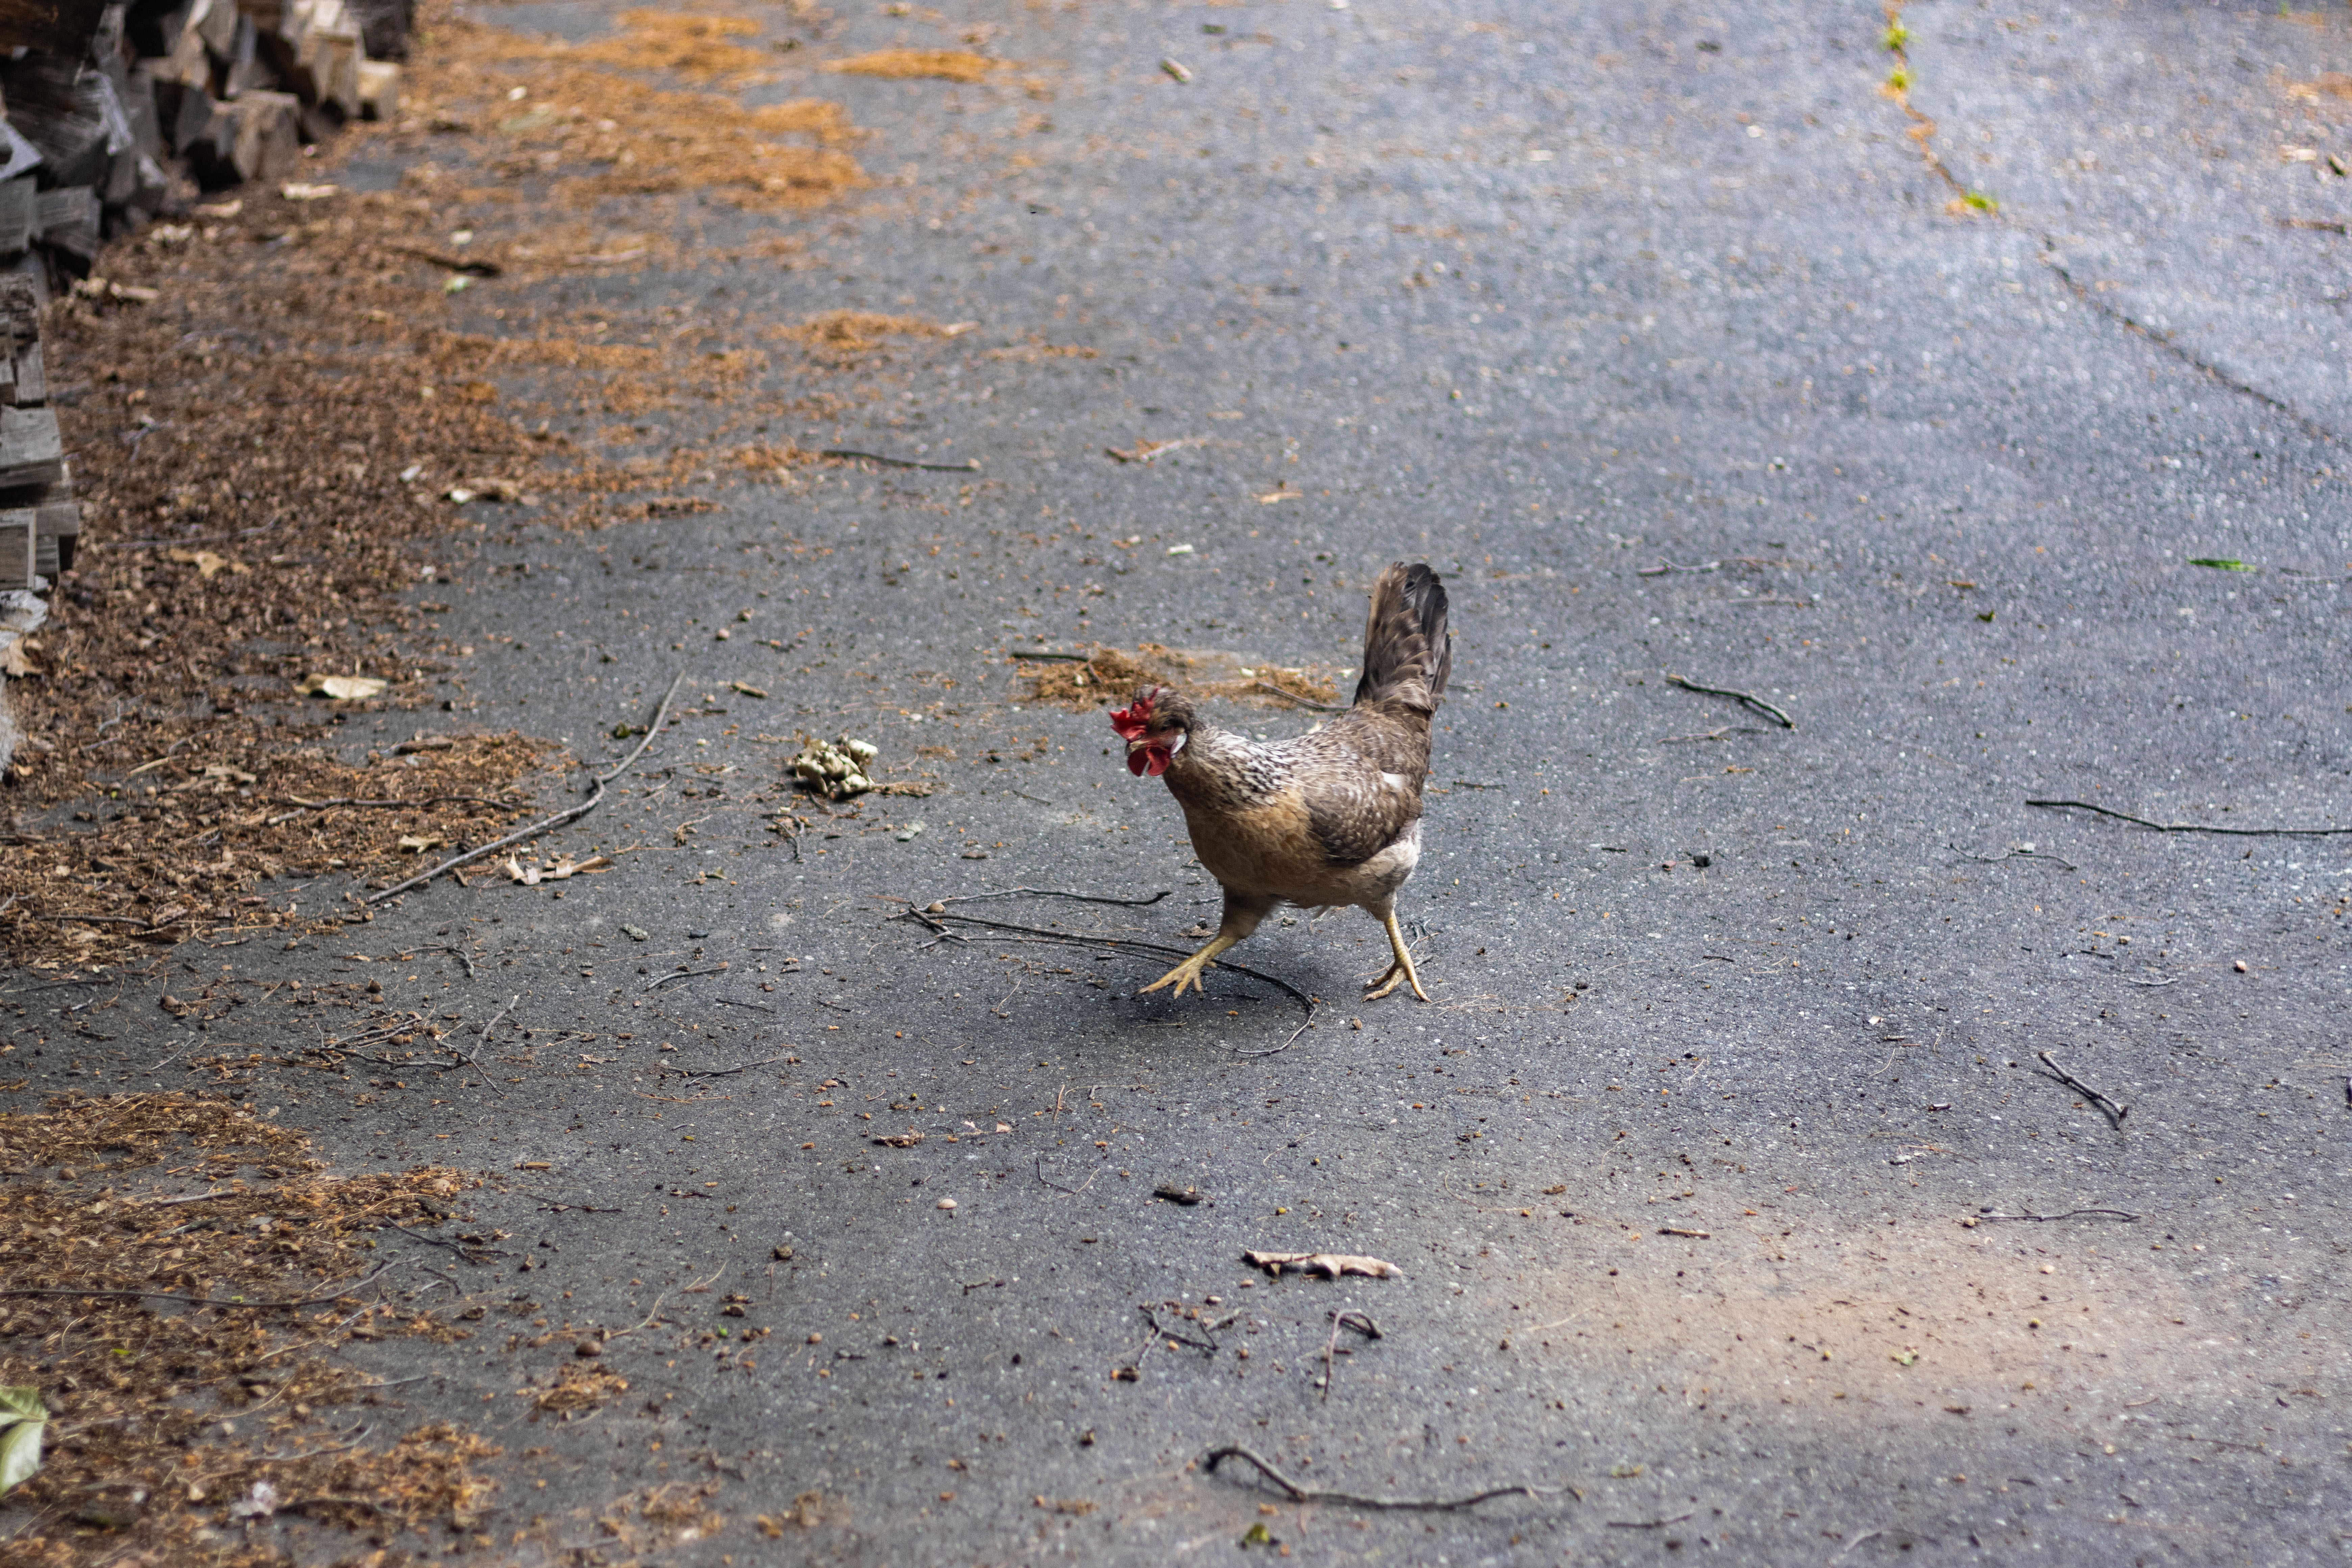 Chicken catcher bodycams deemed not reasonable following animal